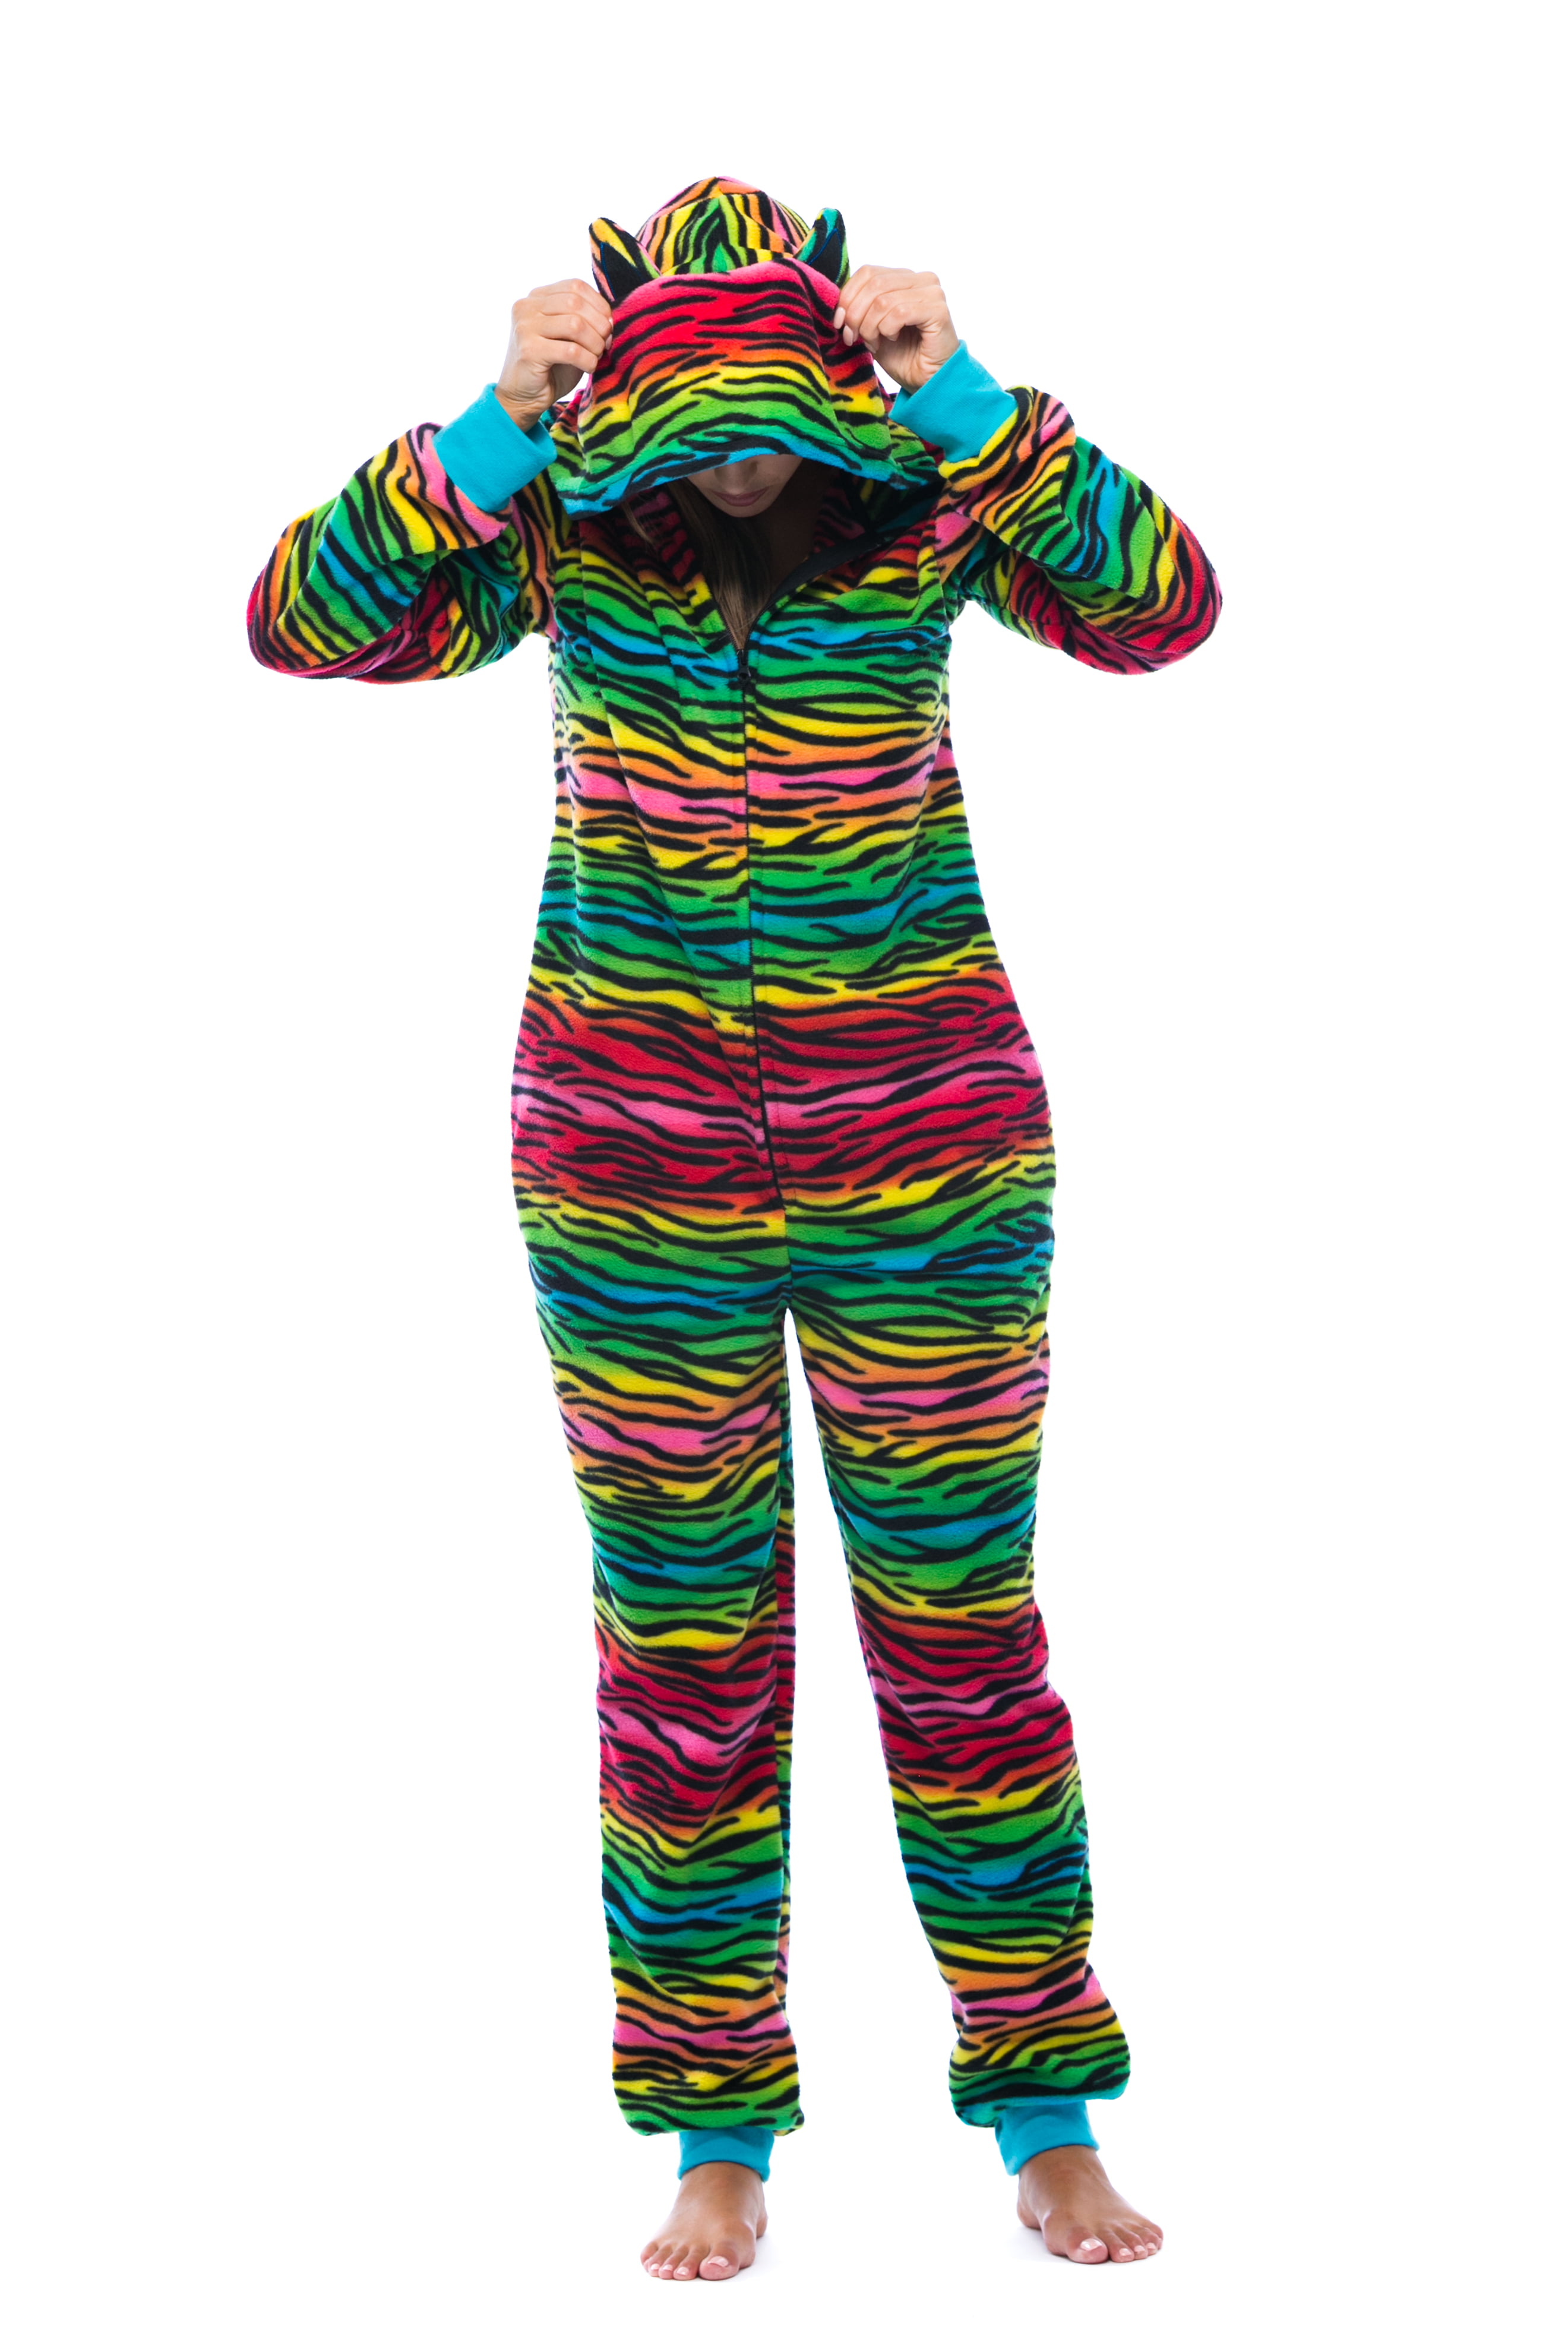 i-Smalls Cute Zebra rainbow Pyjamas Sleepwear Jumpsuit All in One 